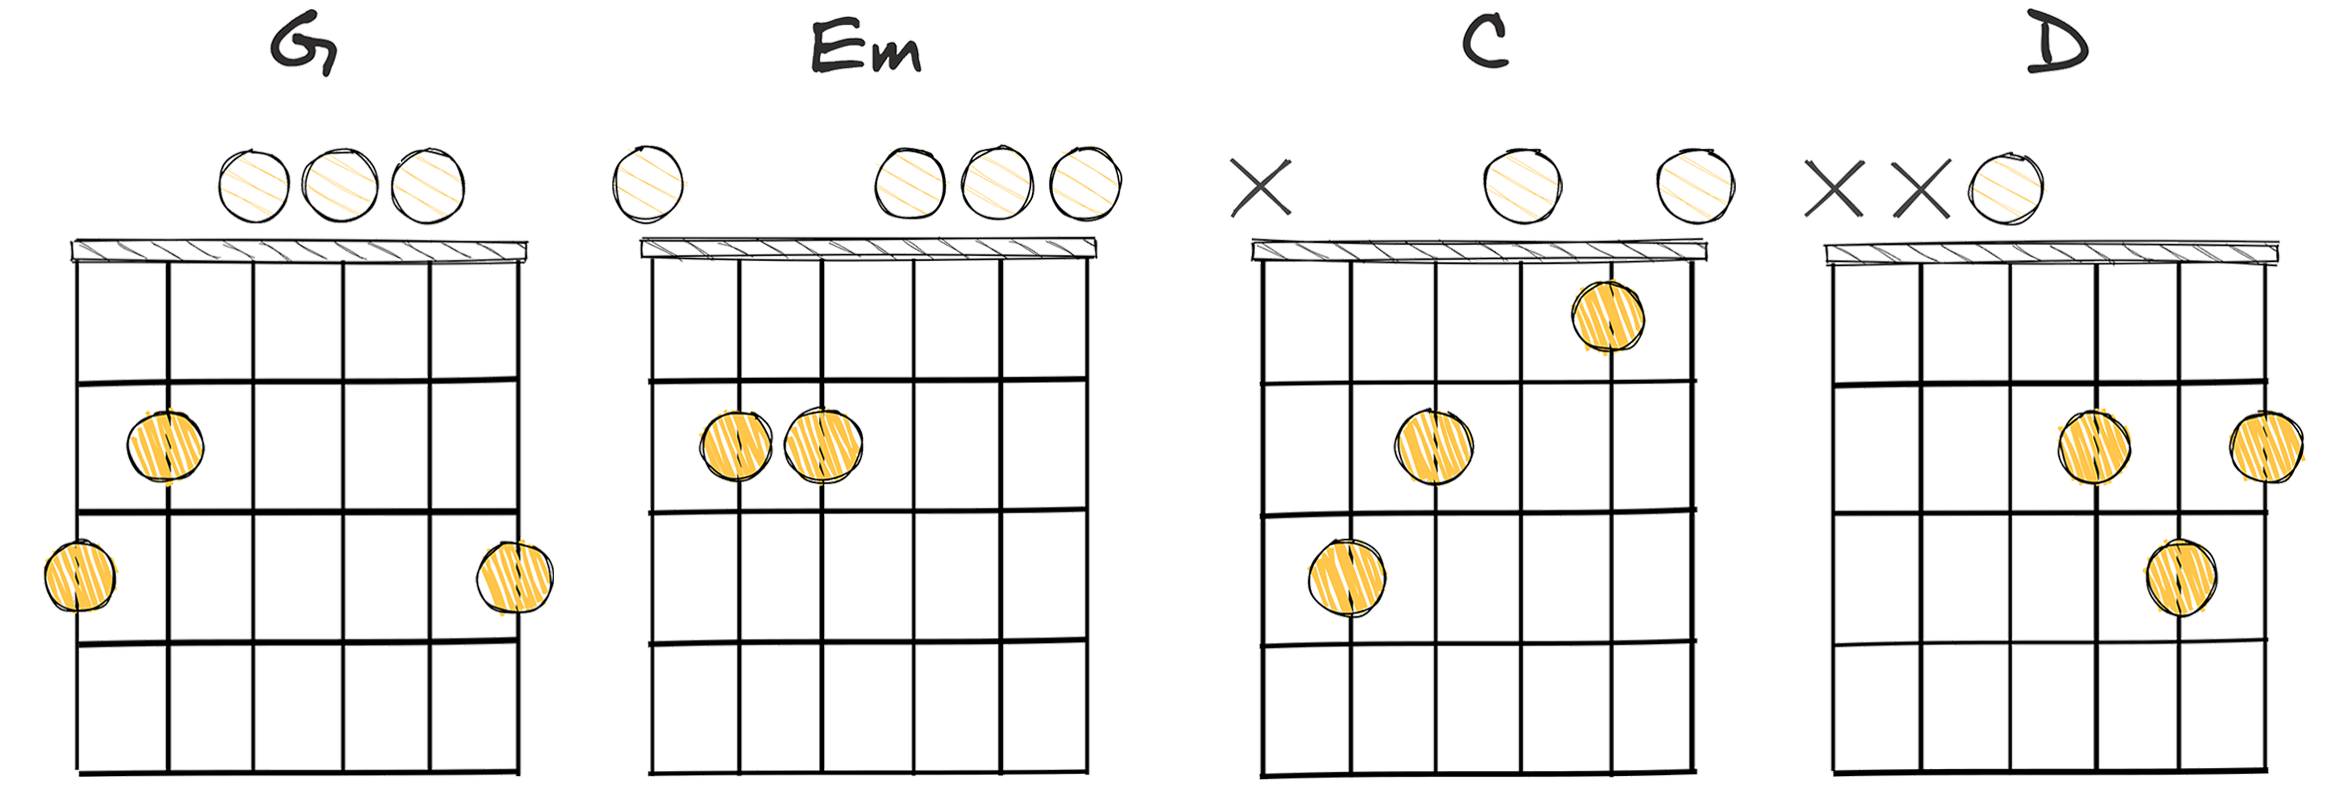 I-VI-IV-V (1-6-4-5) chords diagram